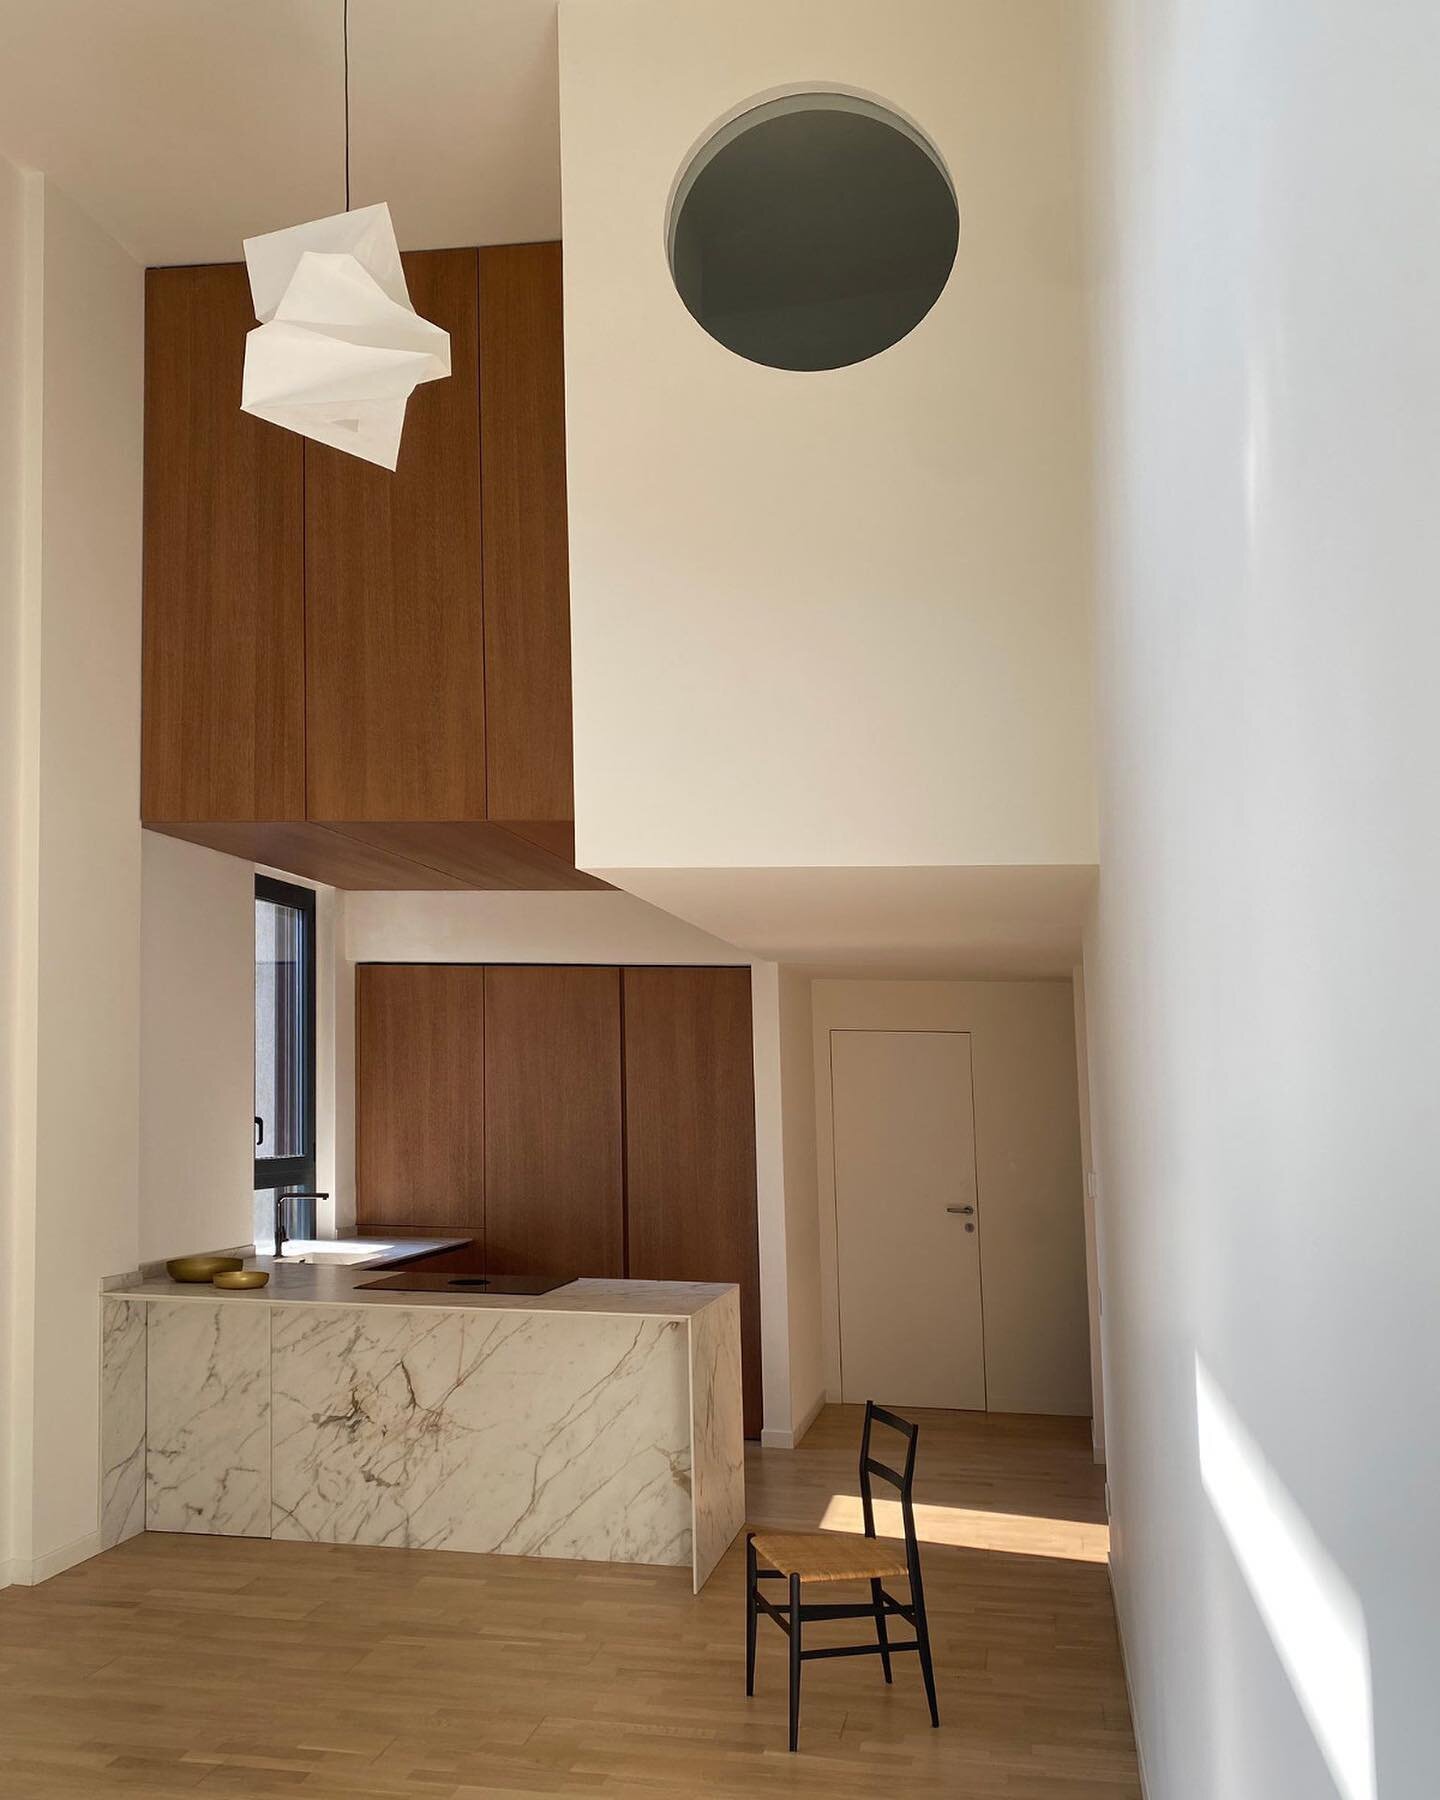 Milano, Casa Tolstoj : kitchen design by @gerardomari +  @stefanialoschidesign for @cappellinicucine.official 💥

.
.

#homedecor #homedesign #design #interiors #decor #architecture #furniture #interiostyling #instadesign #instahome #homesweethome #s